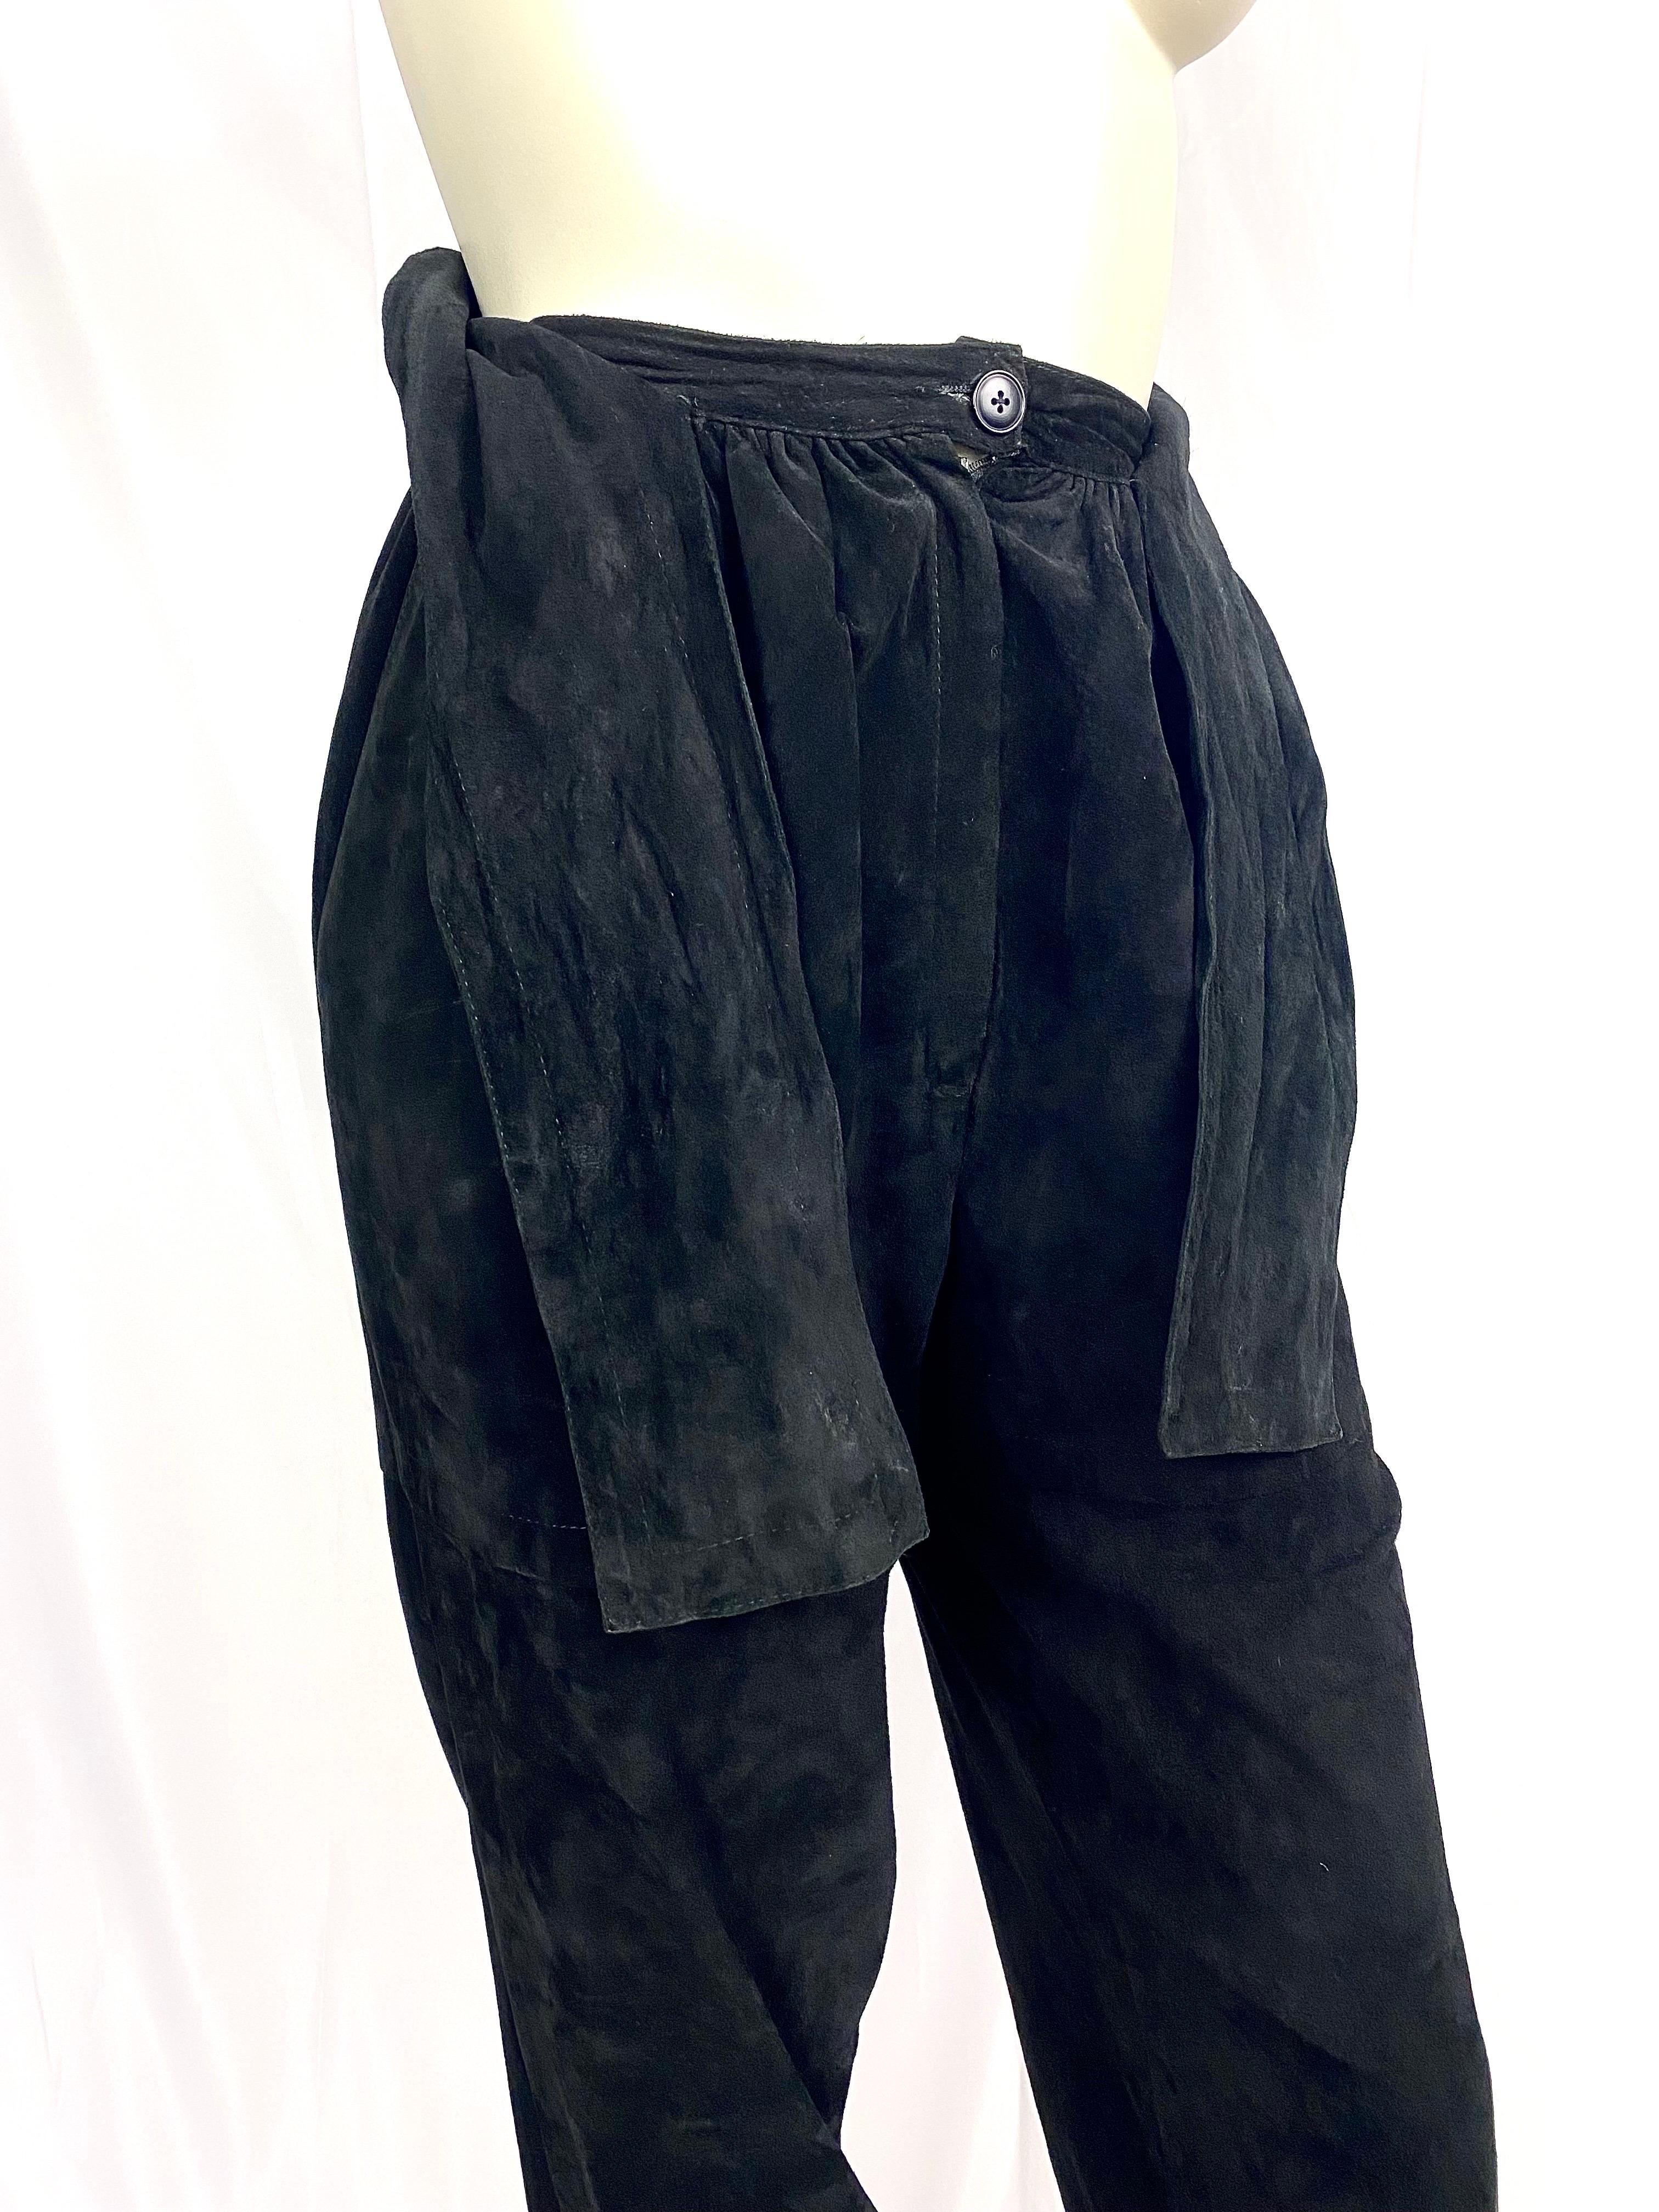 Vintage Yves saint laurent 1980's black suede leather high waisted harem pants For Sale 3